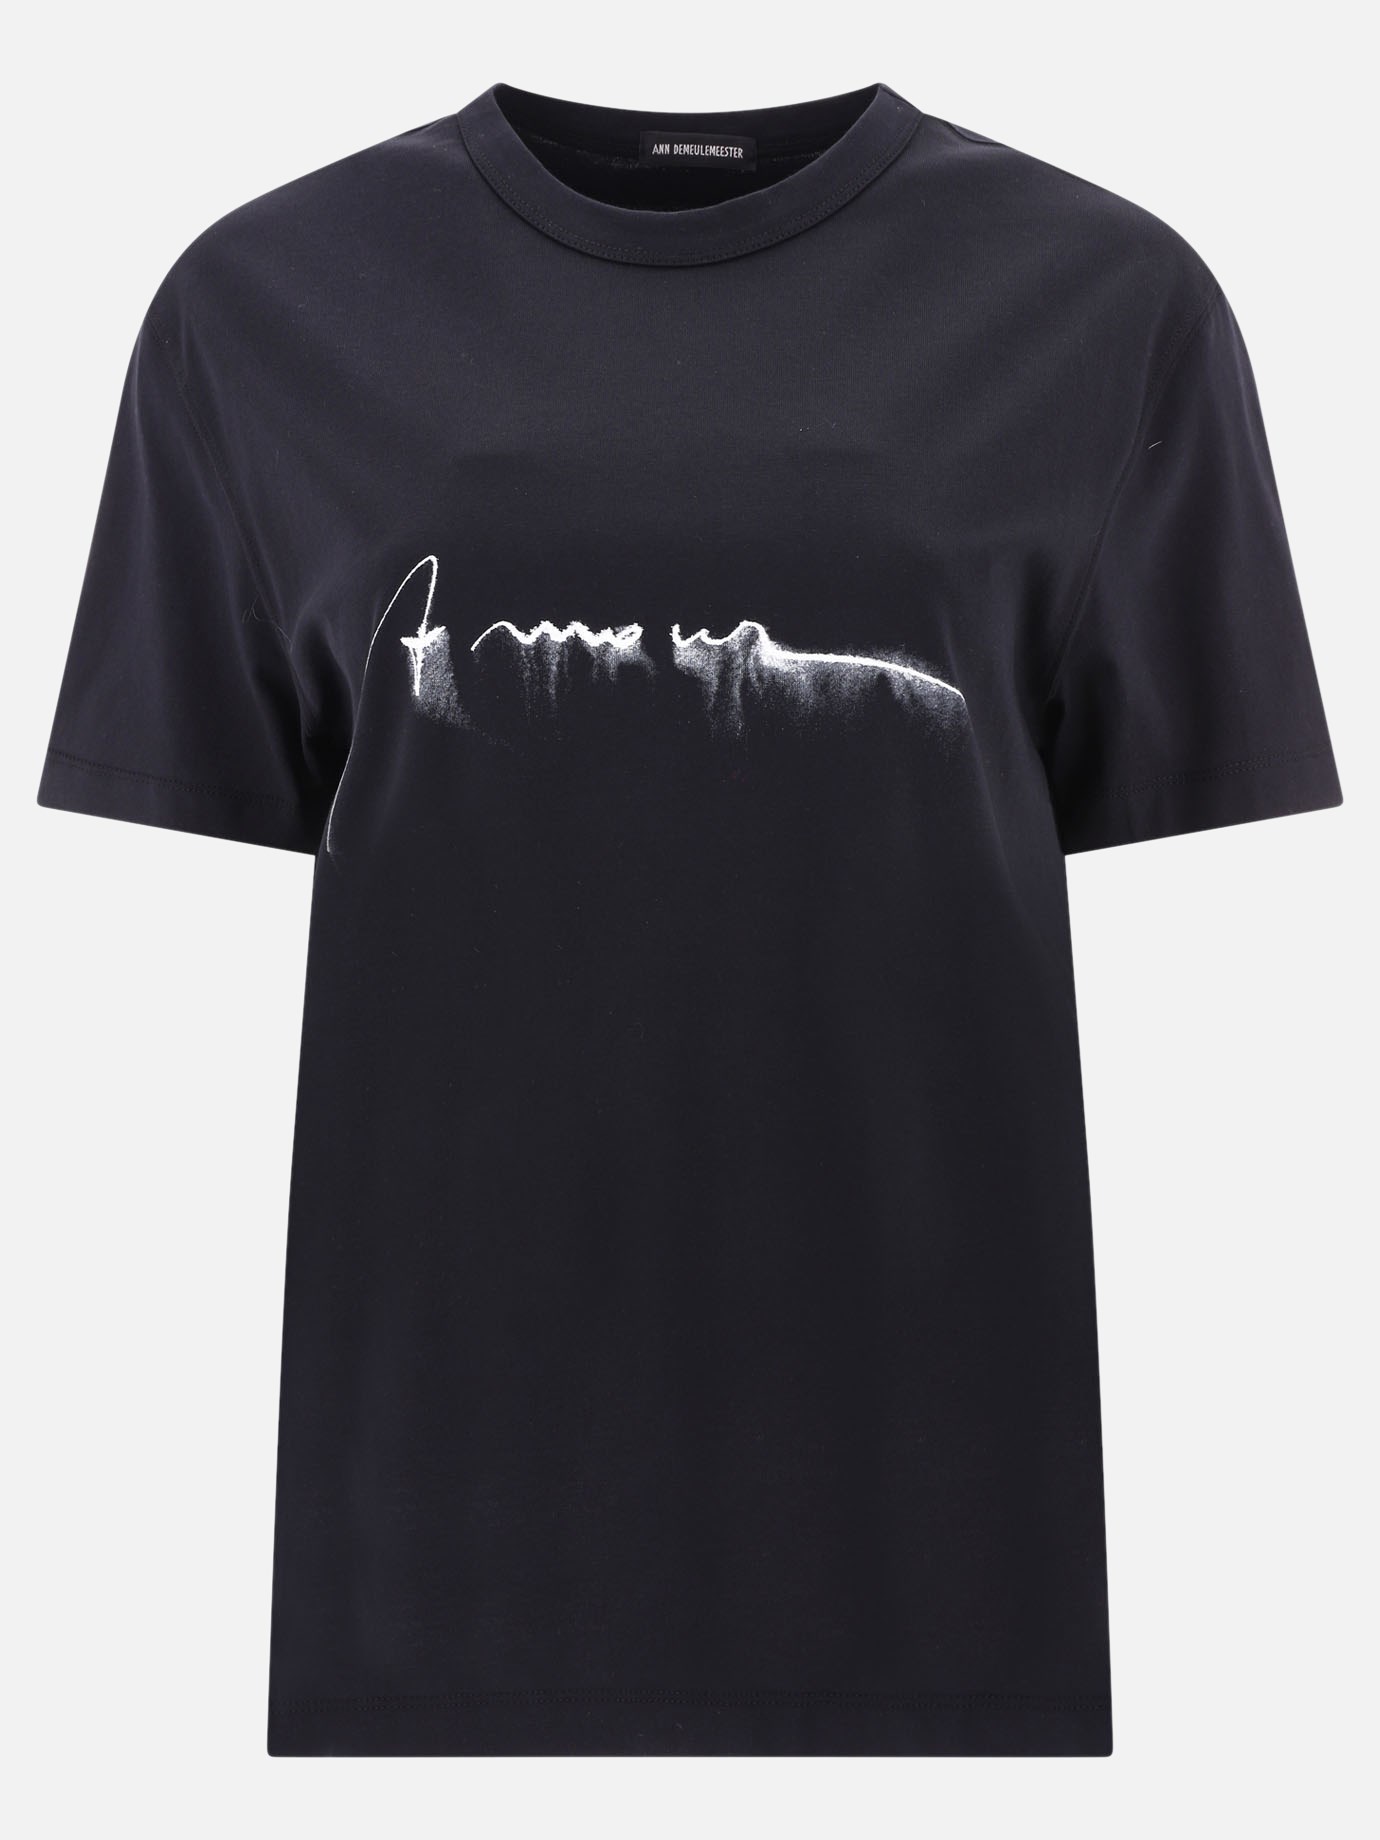  Jarno  t-shirt by Ann Demeulemeester